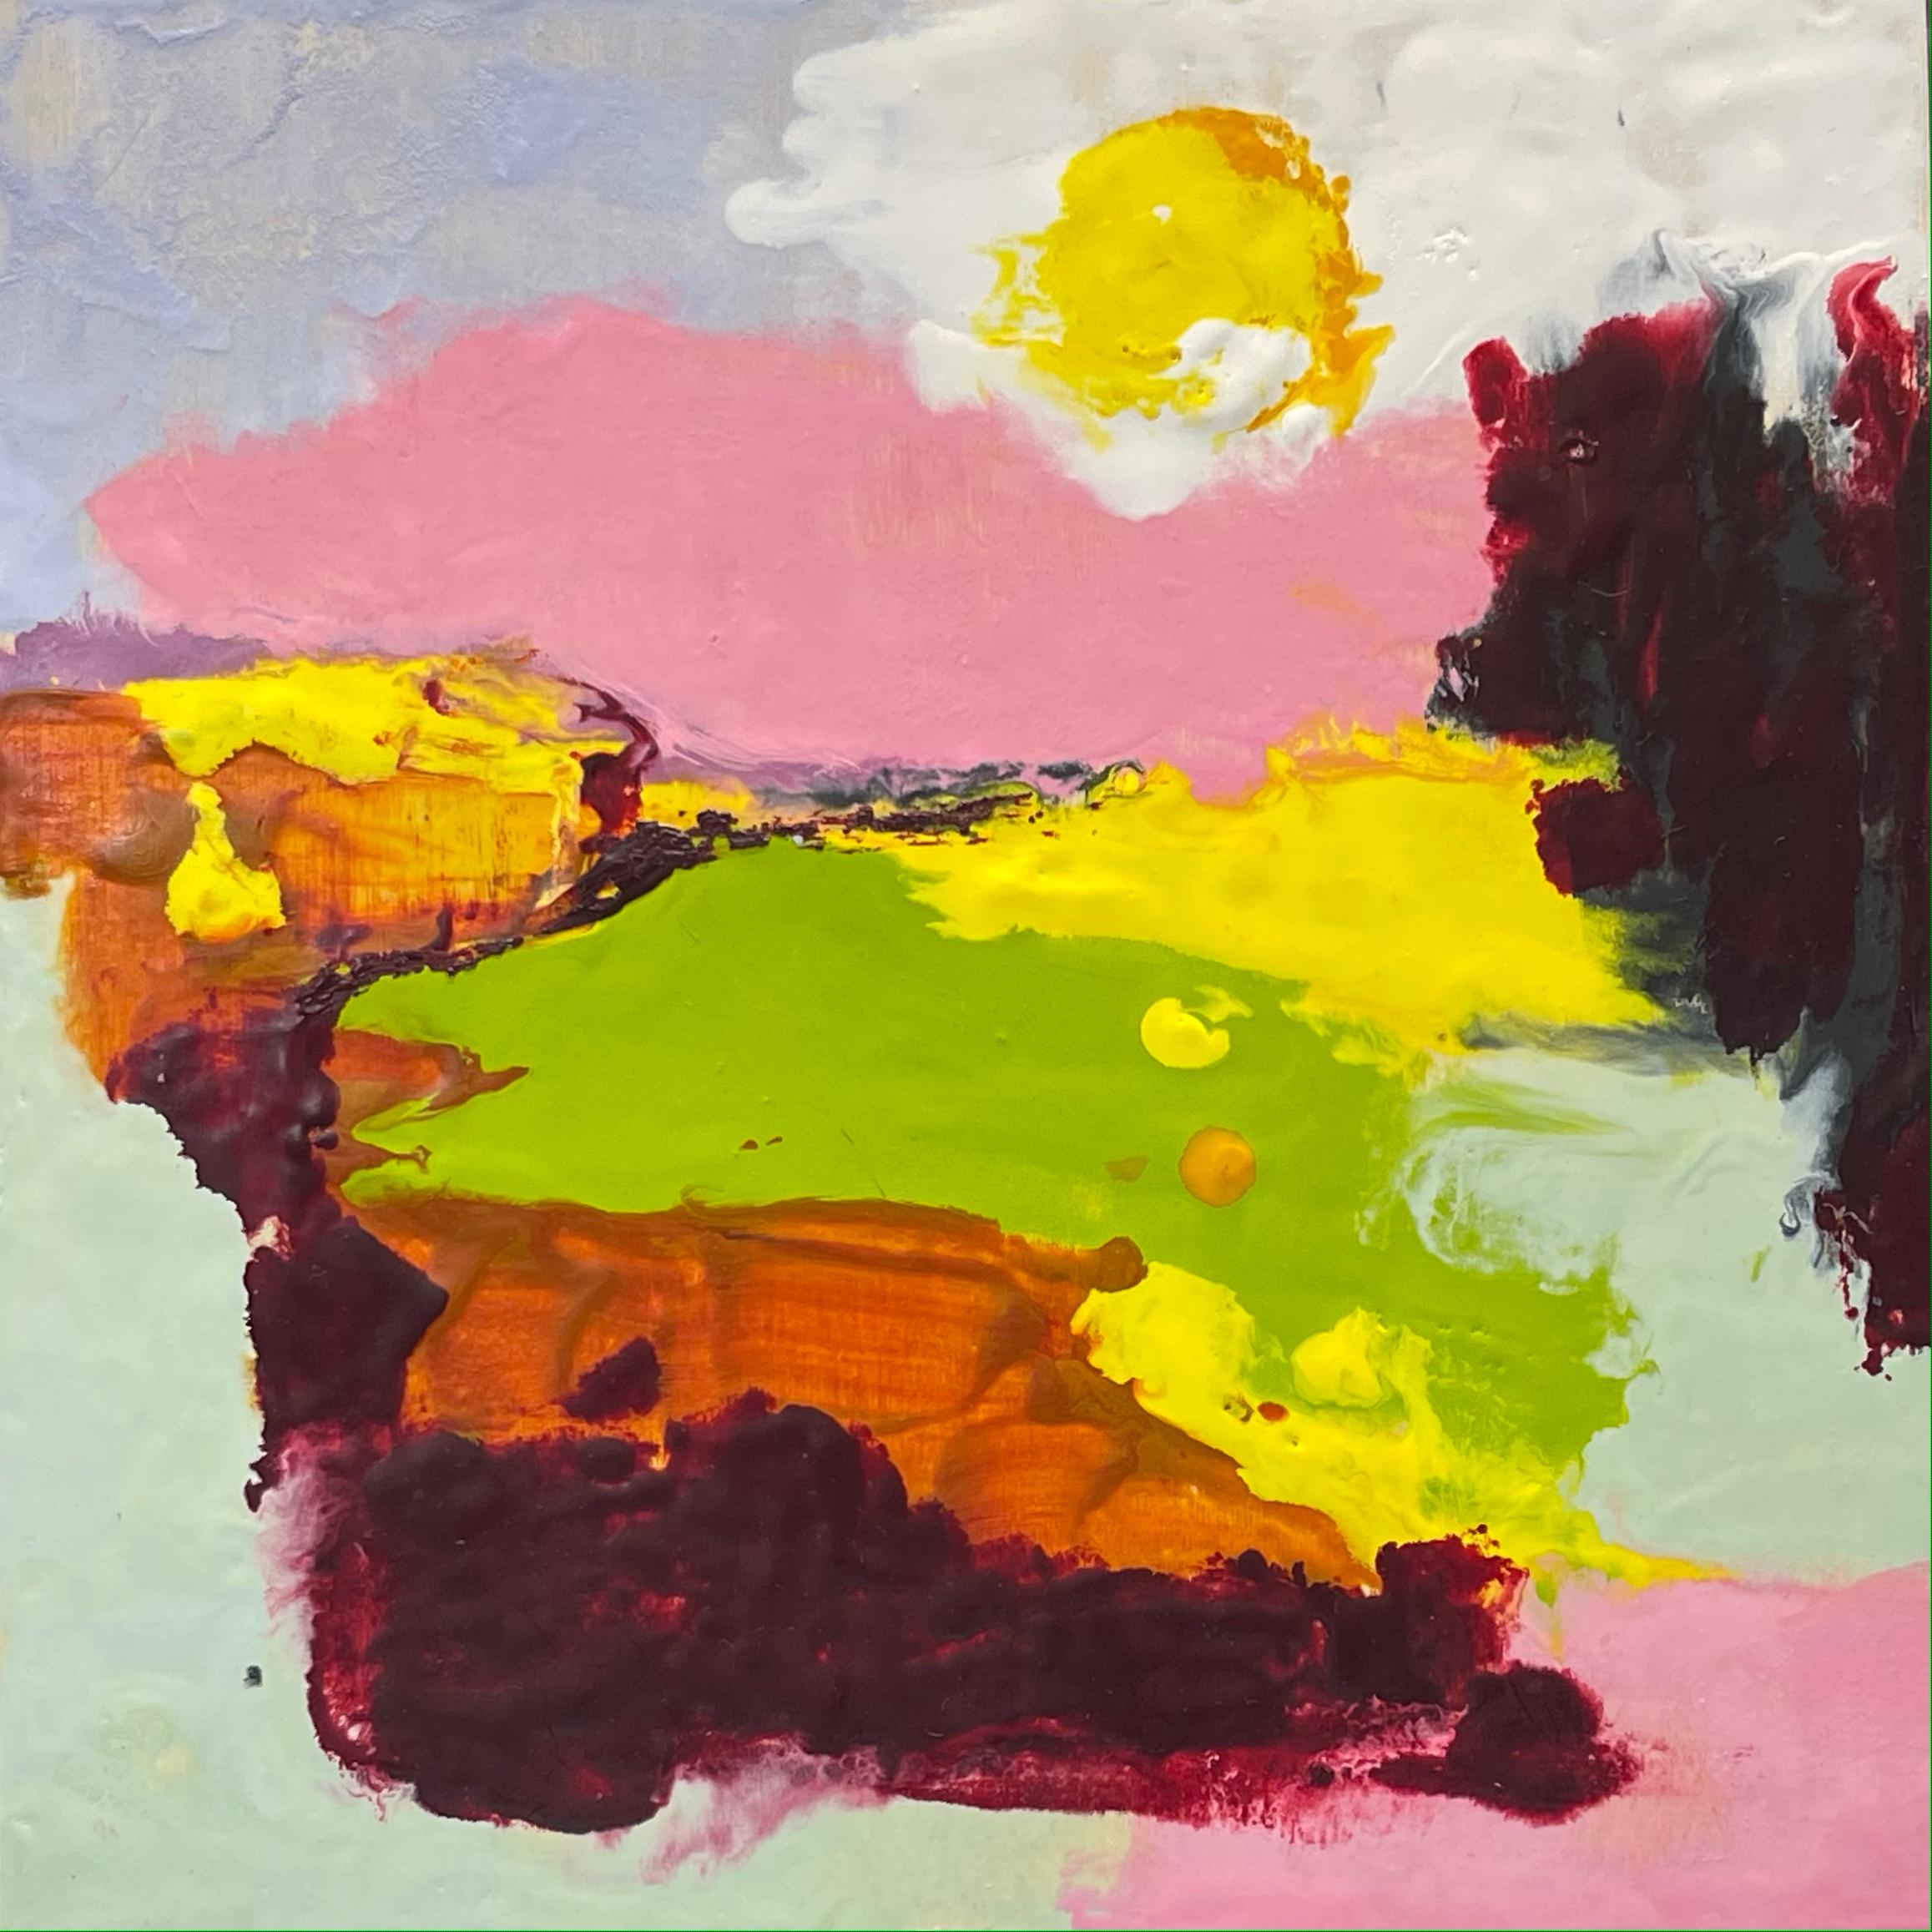 Kate Snow Landscape Painting - Morning Landscape, impressionistic landscape painting